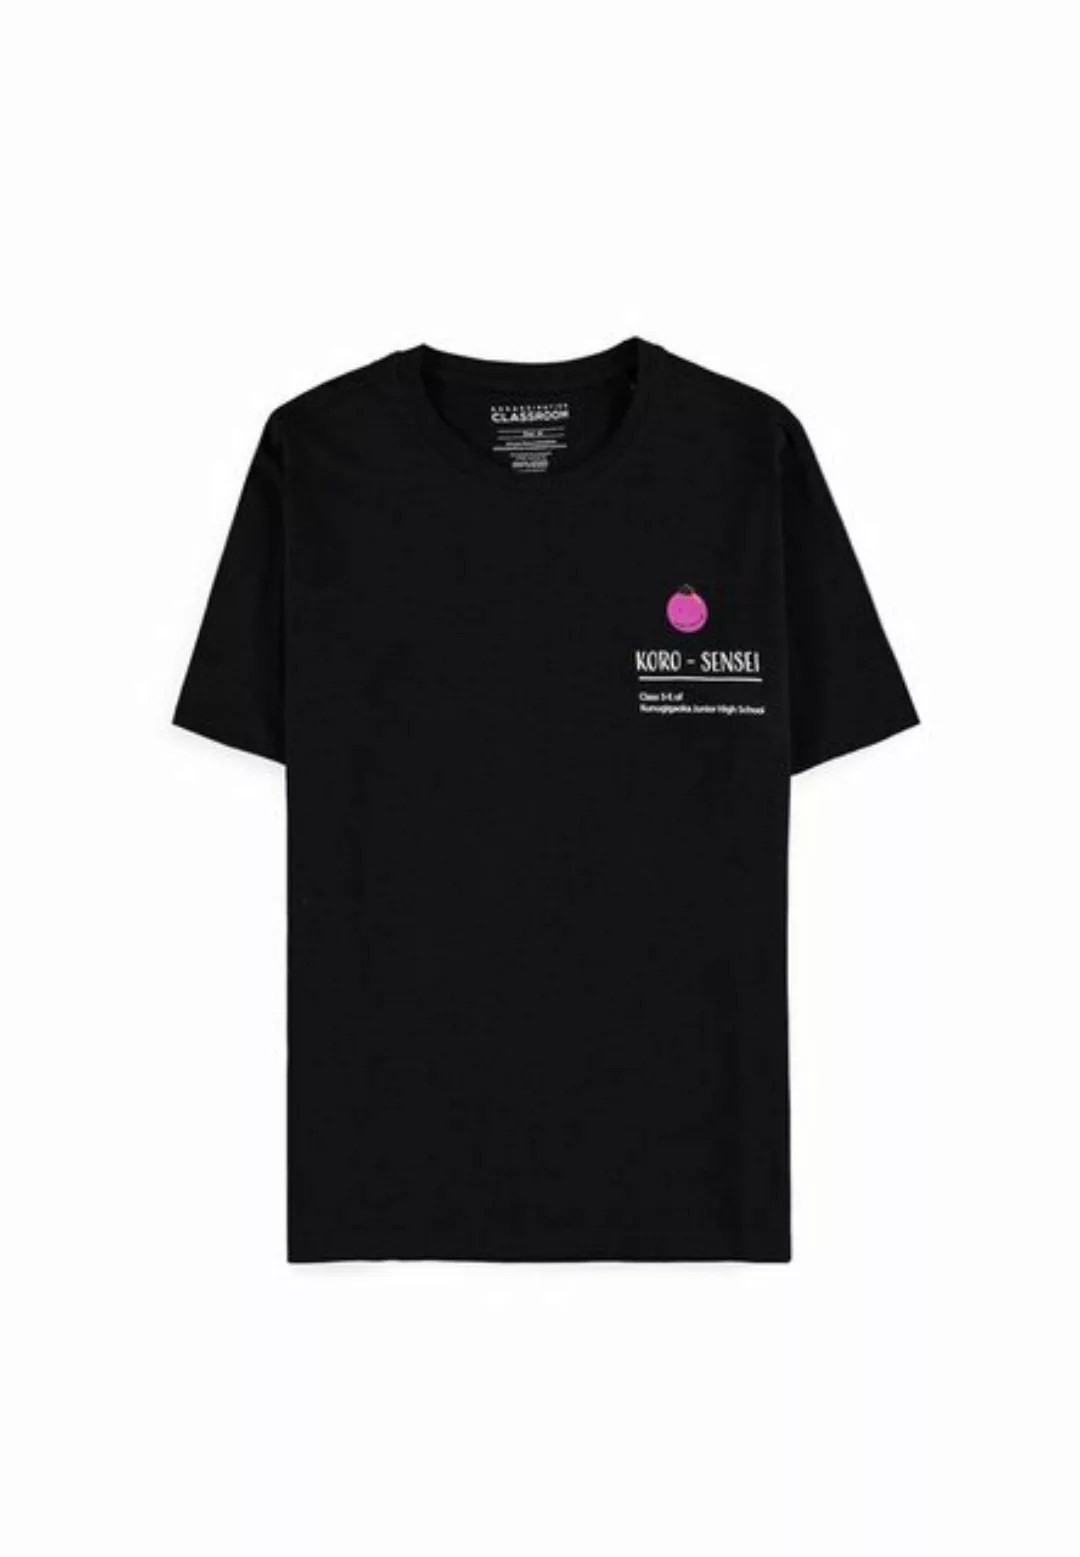 Assassination Classroom T-Shirt günstig online kaufen